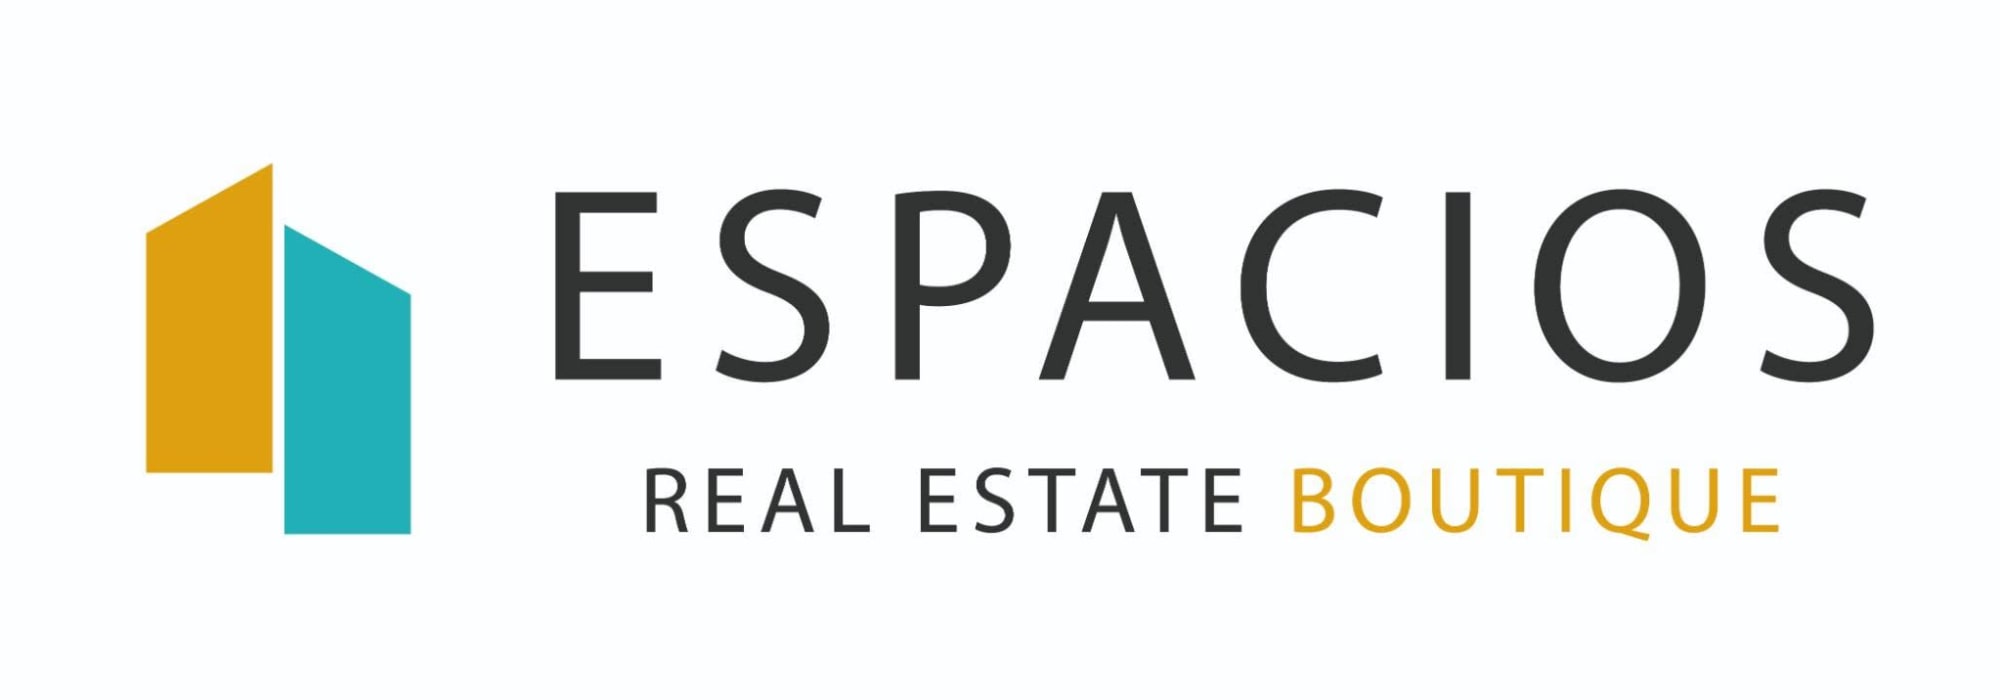 Espacios Real Estate Boutique